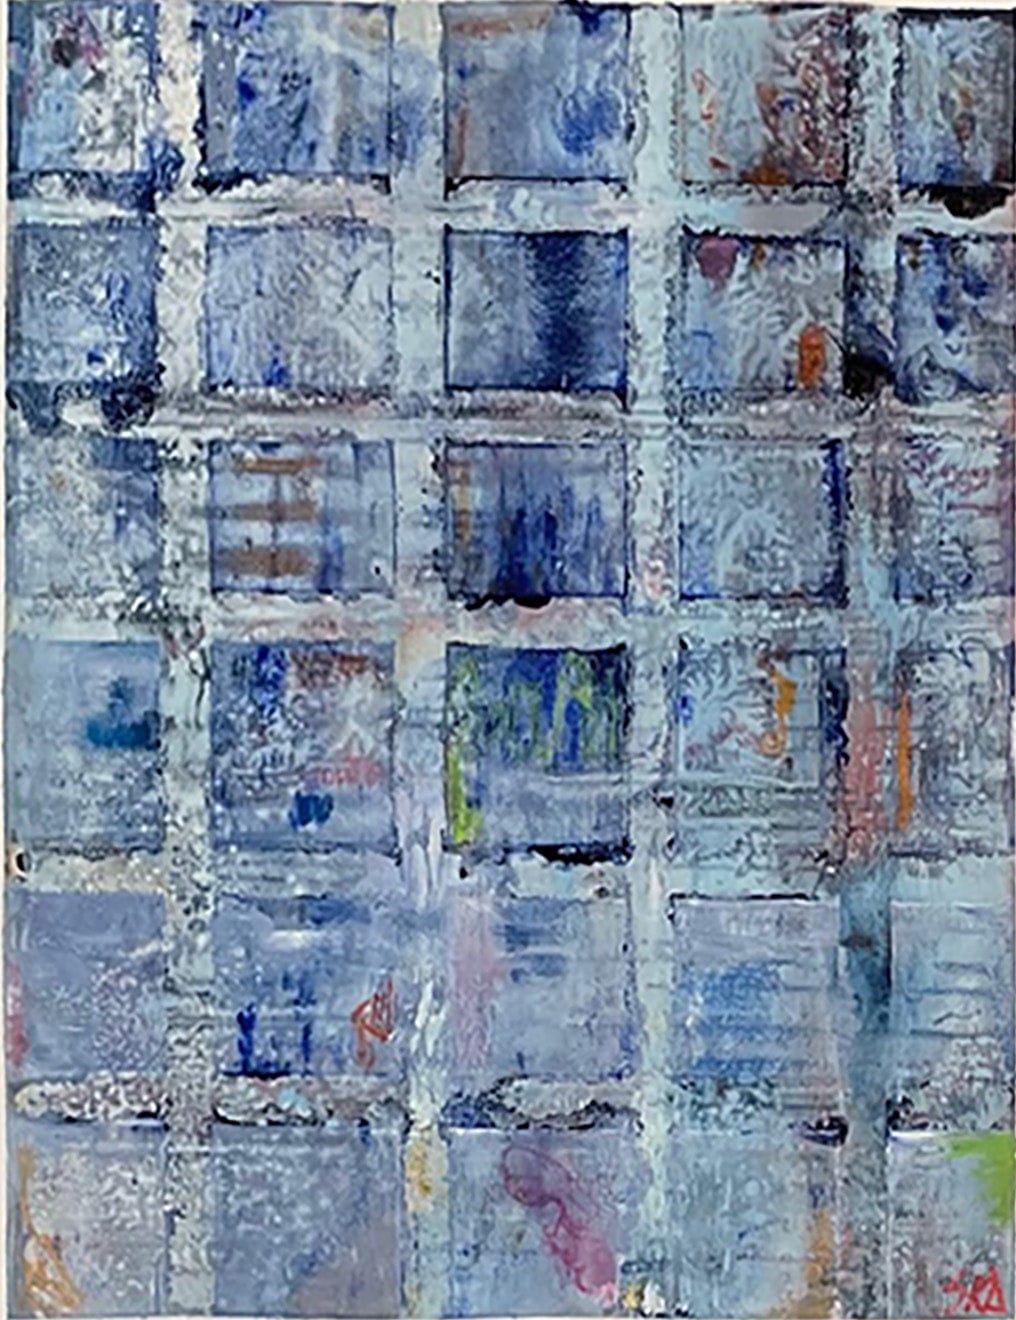 Sue Daniel painting Color Blocks #1, framed Art Works Gallery